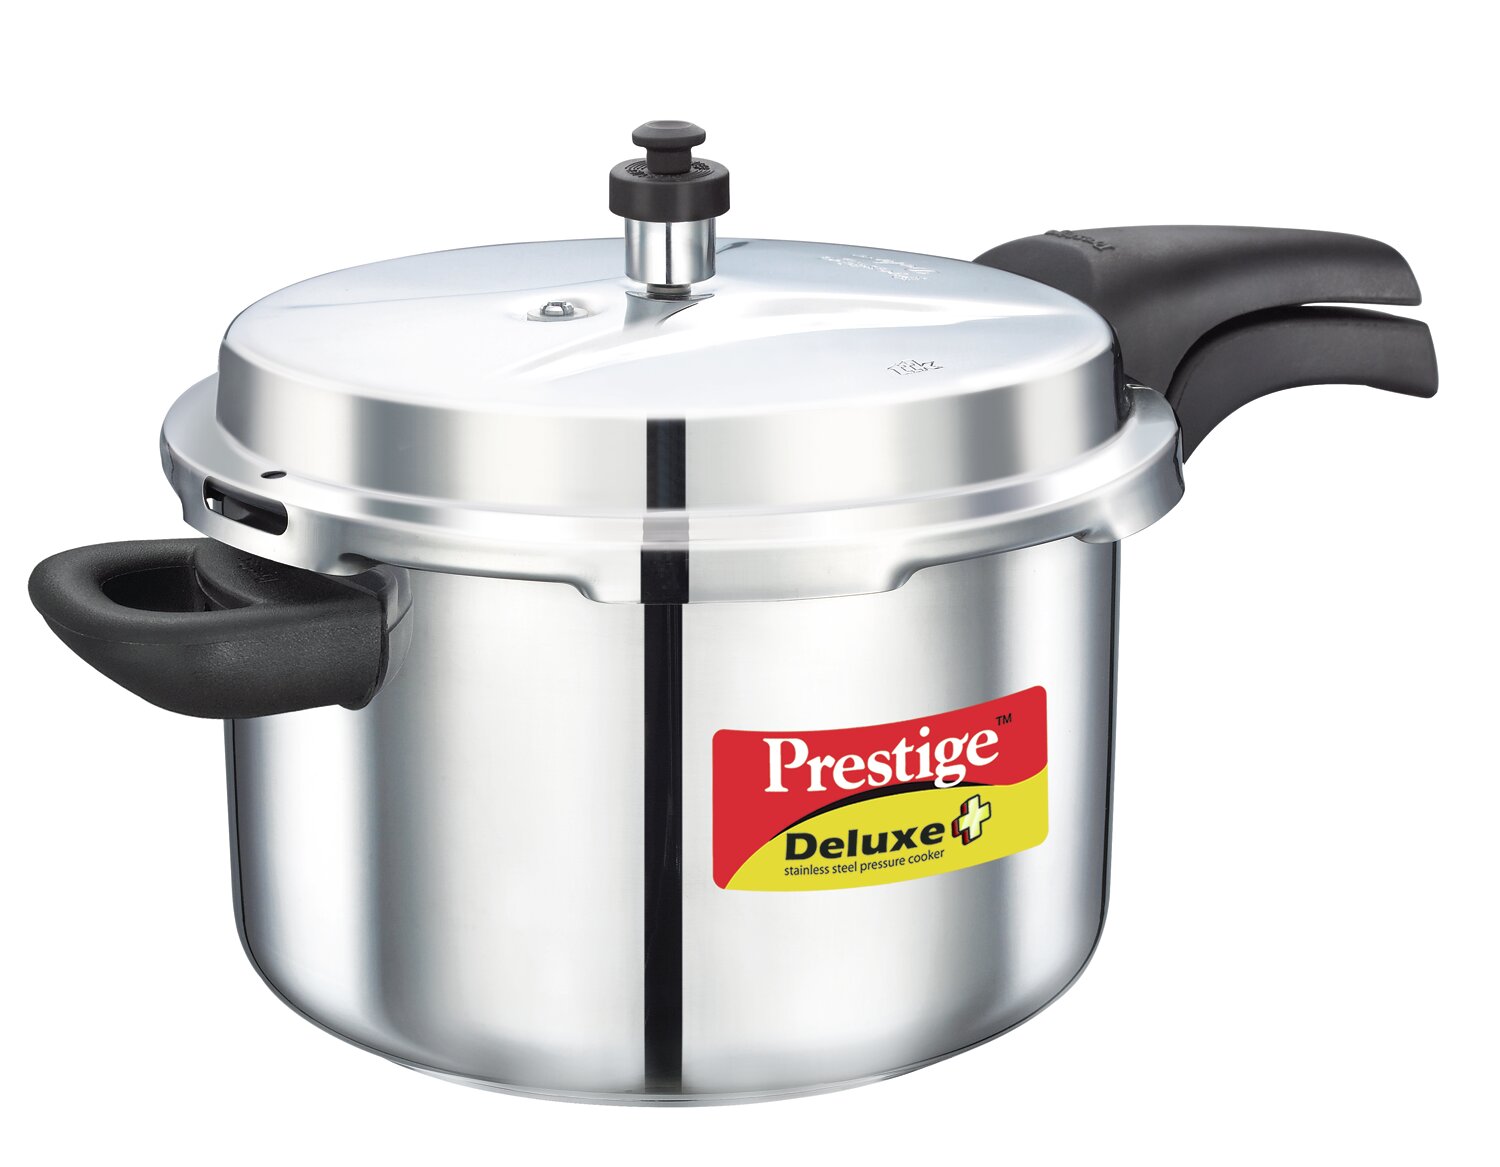 Prestige Cookers Deluxe Stainless Steel Pressure Cooker | eBay Prestige Stainless Steel Pressure Cooker